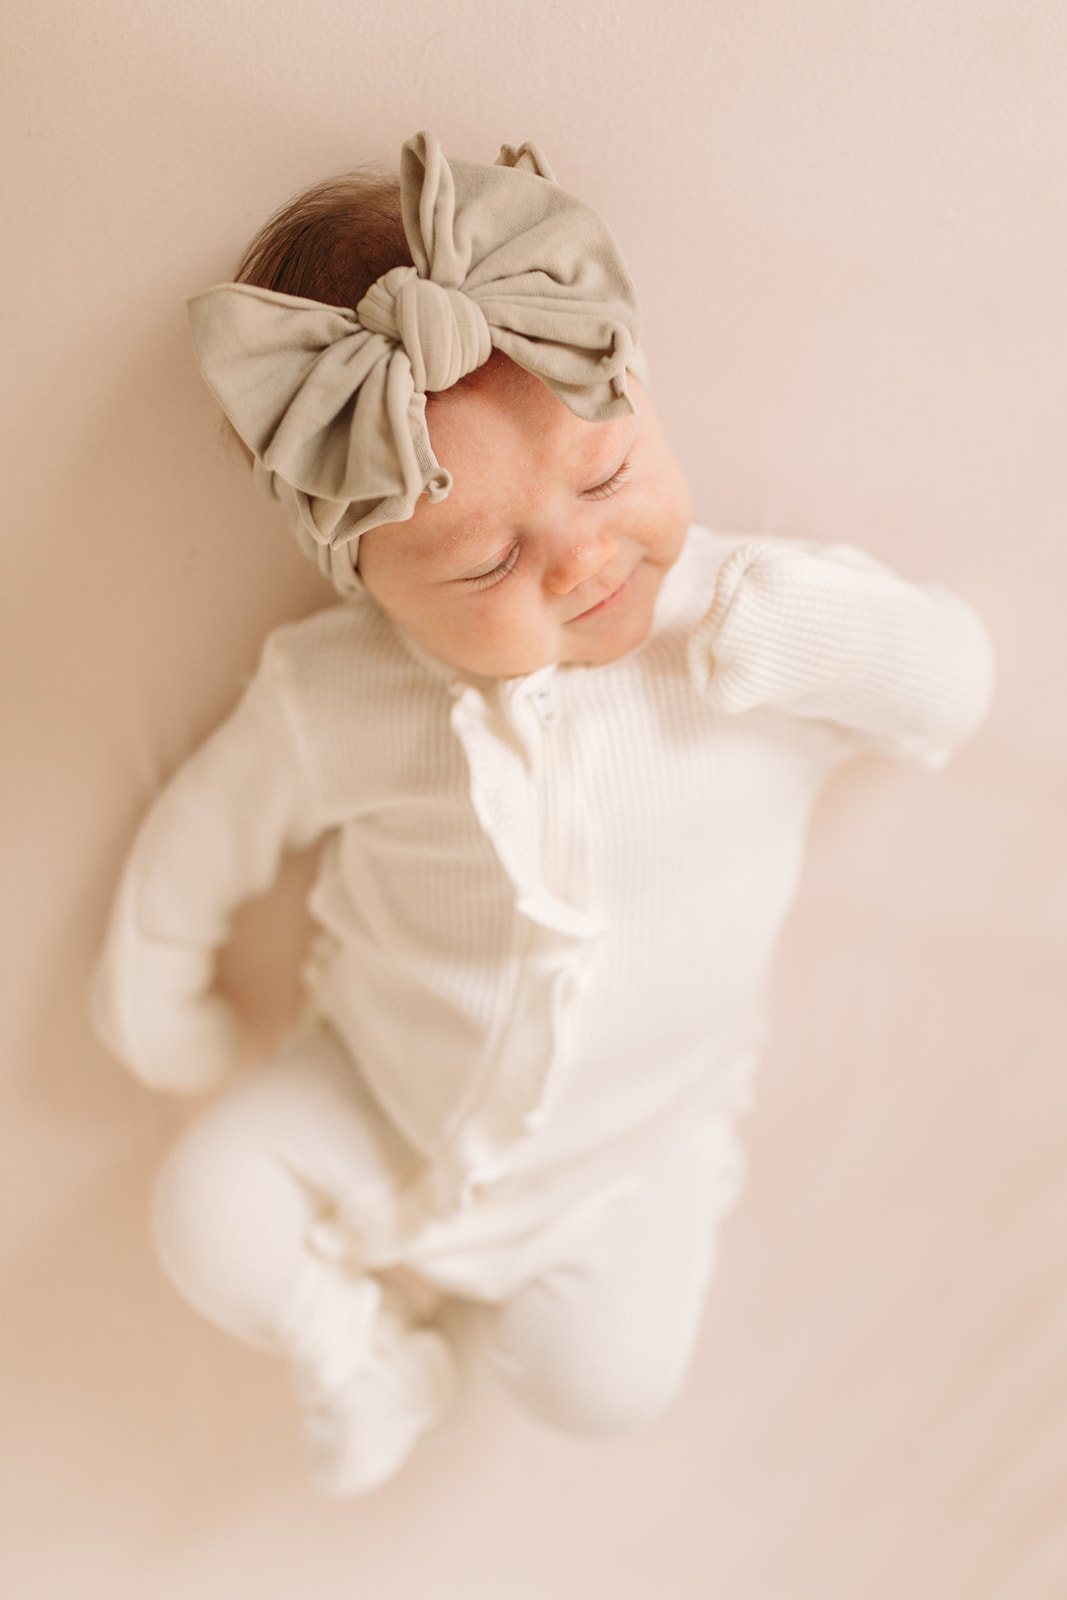 Castle rock colorado newborn photography beautiful baby girl